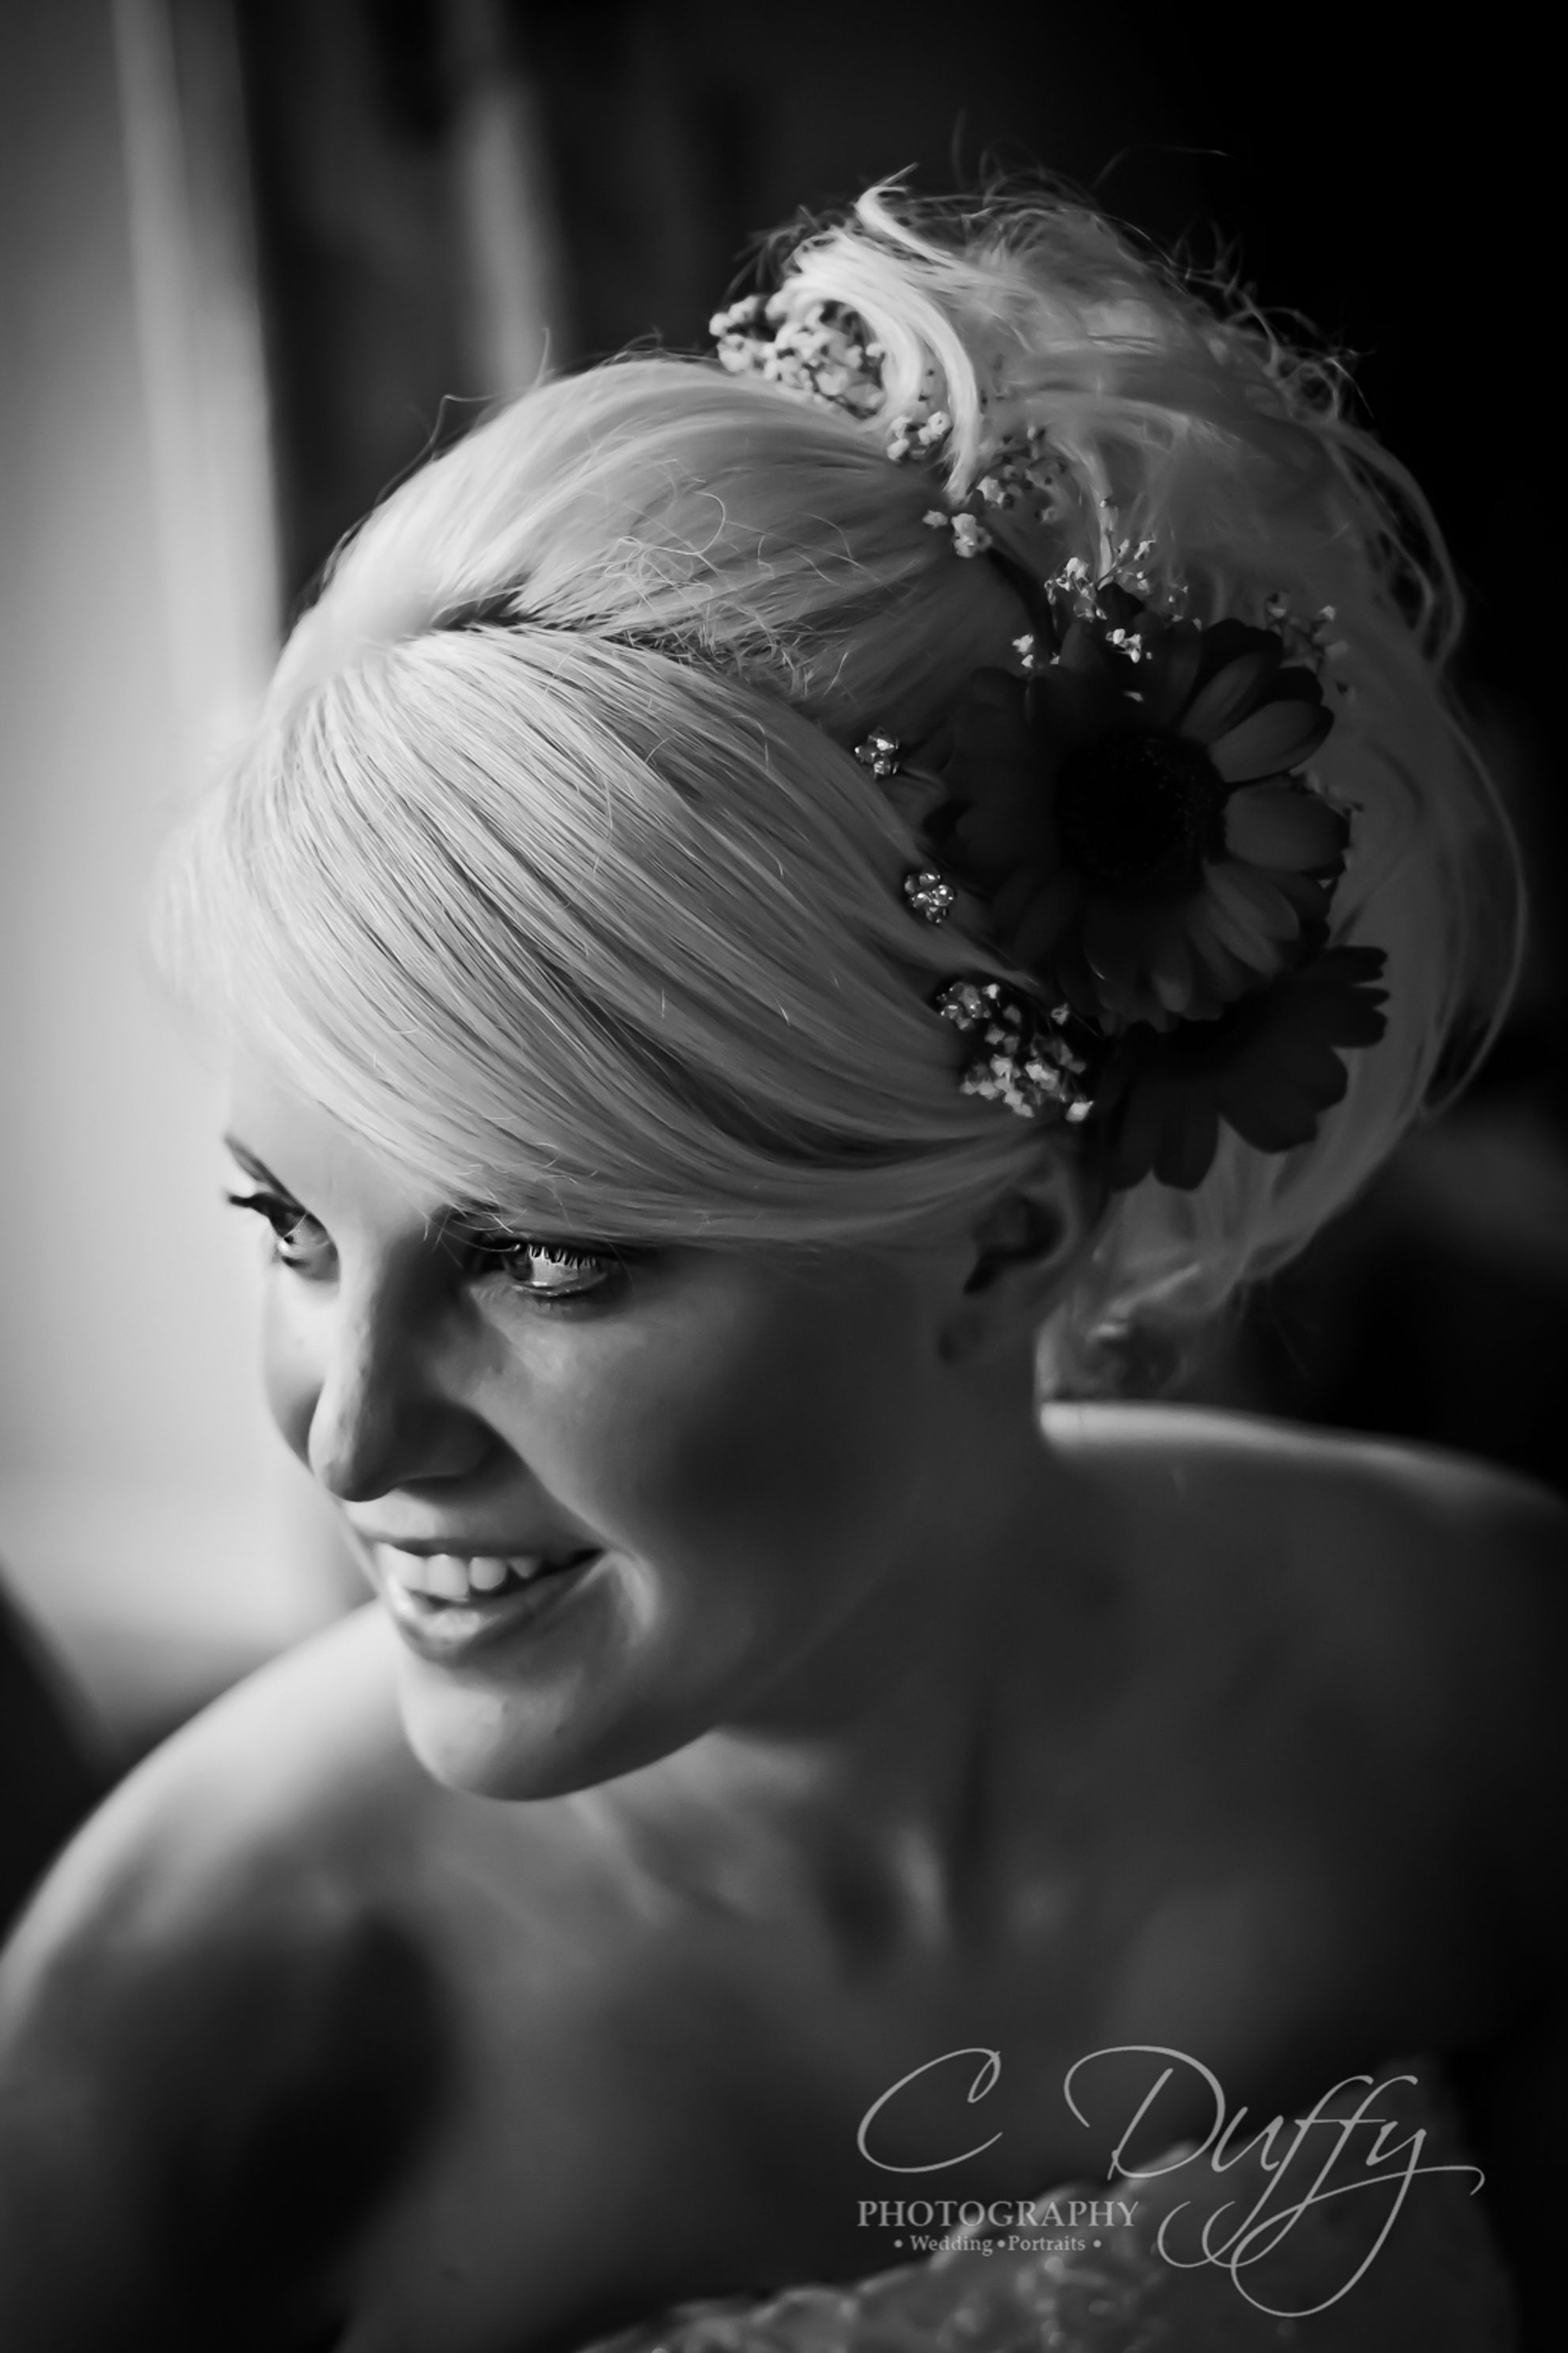 Stunning black and white bride portrait captured by wedding photographer